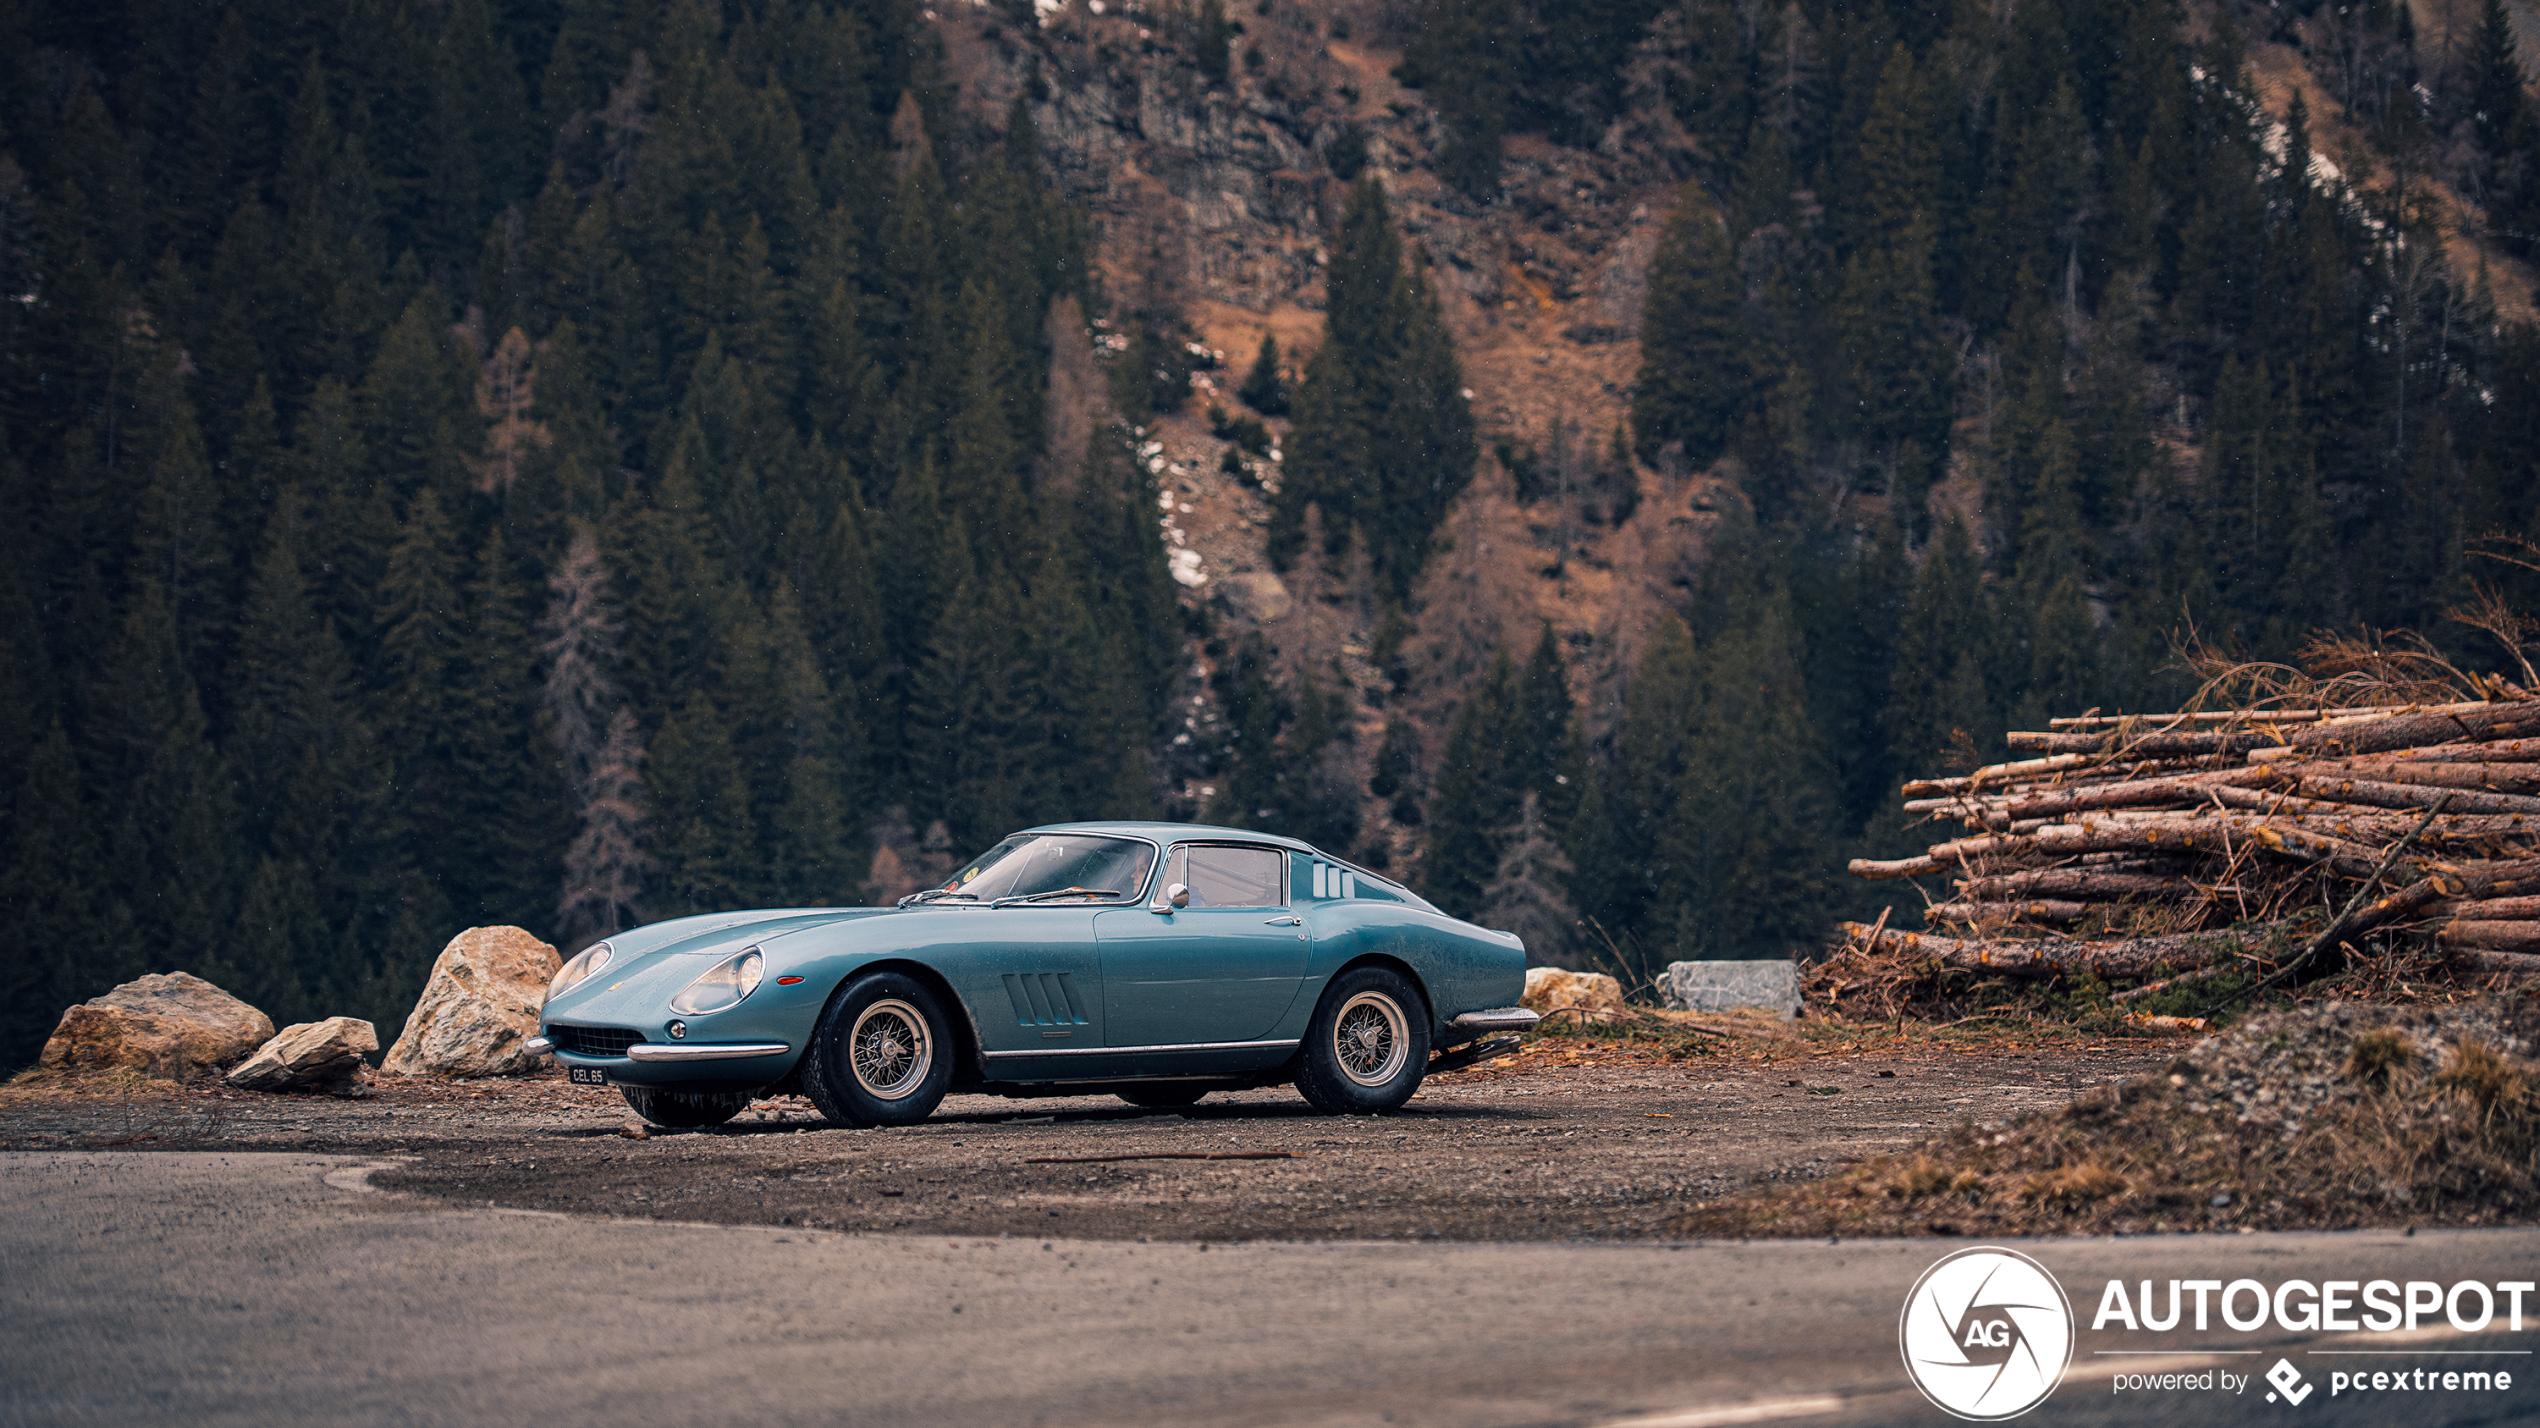 Movie star up in the mountains: Ferrari 275 GTB Alloy